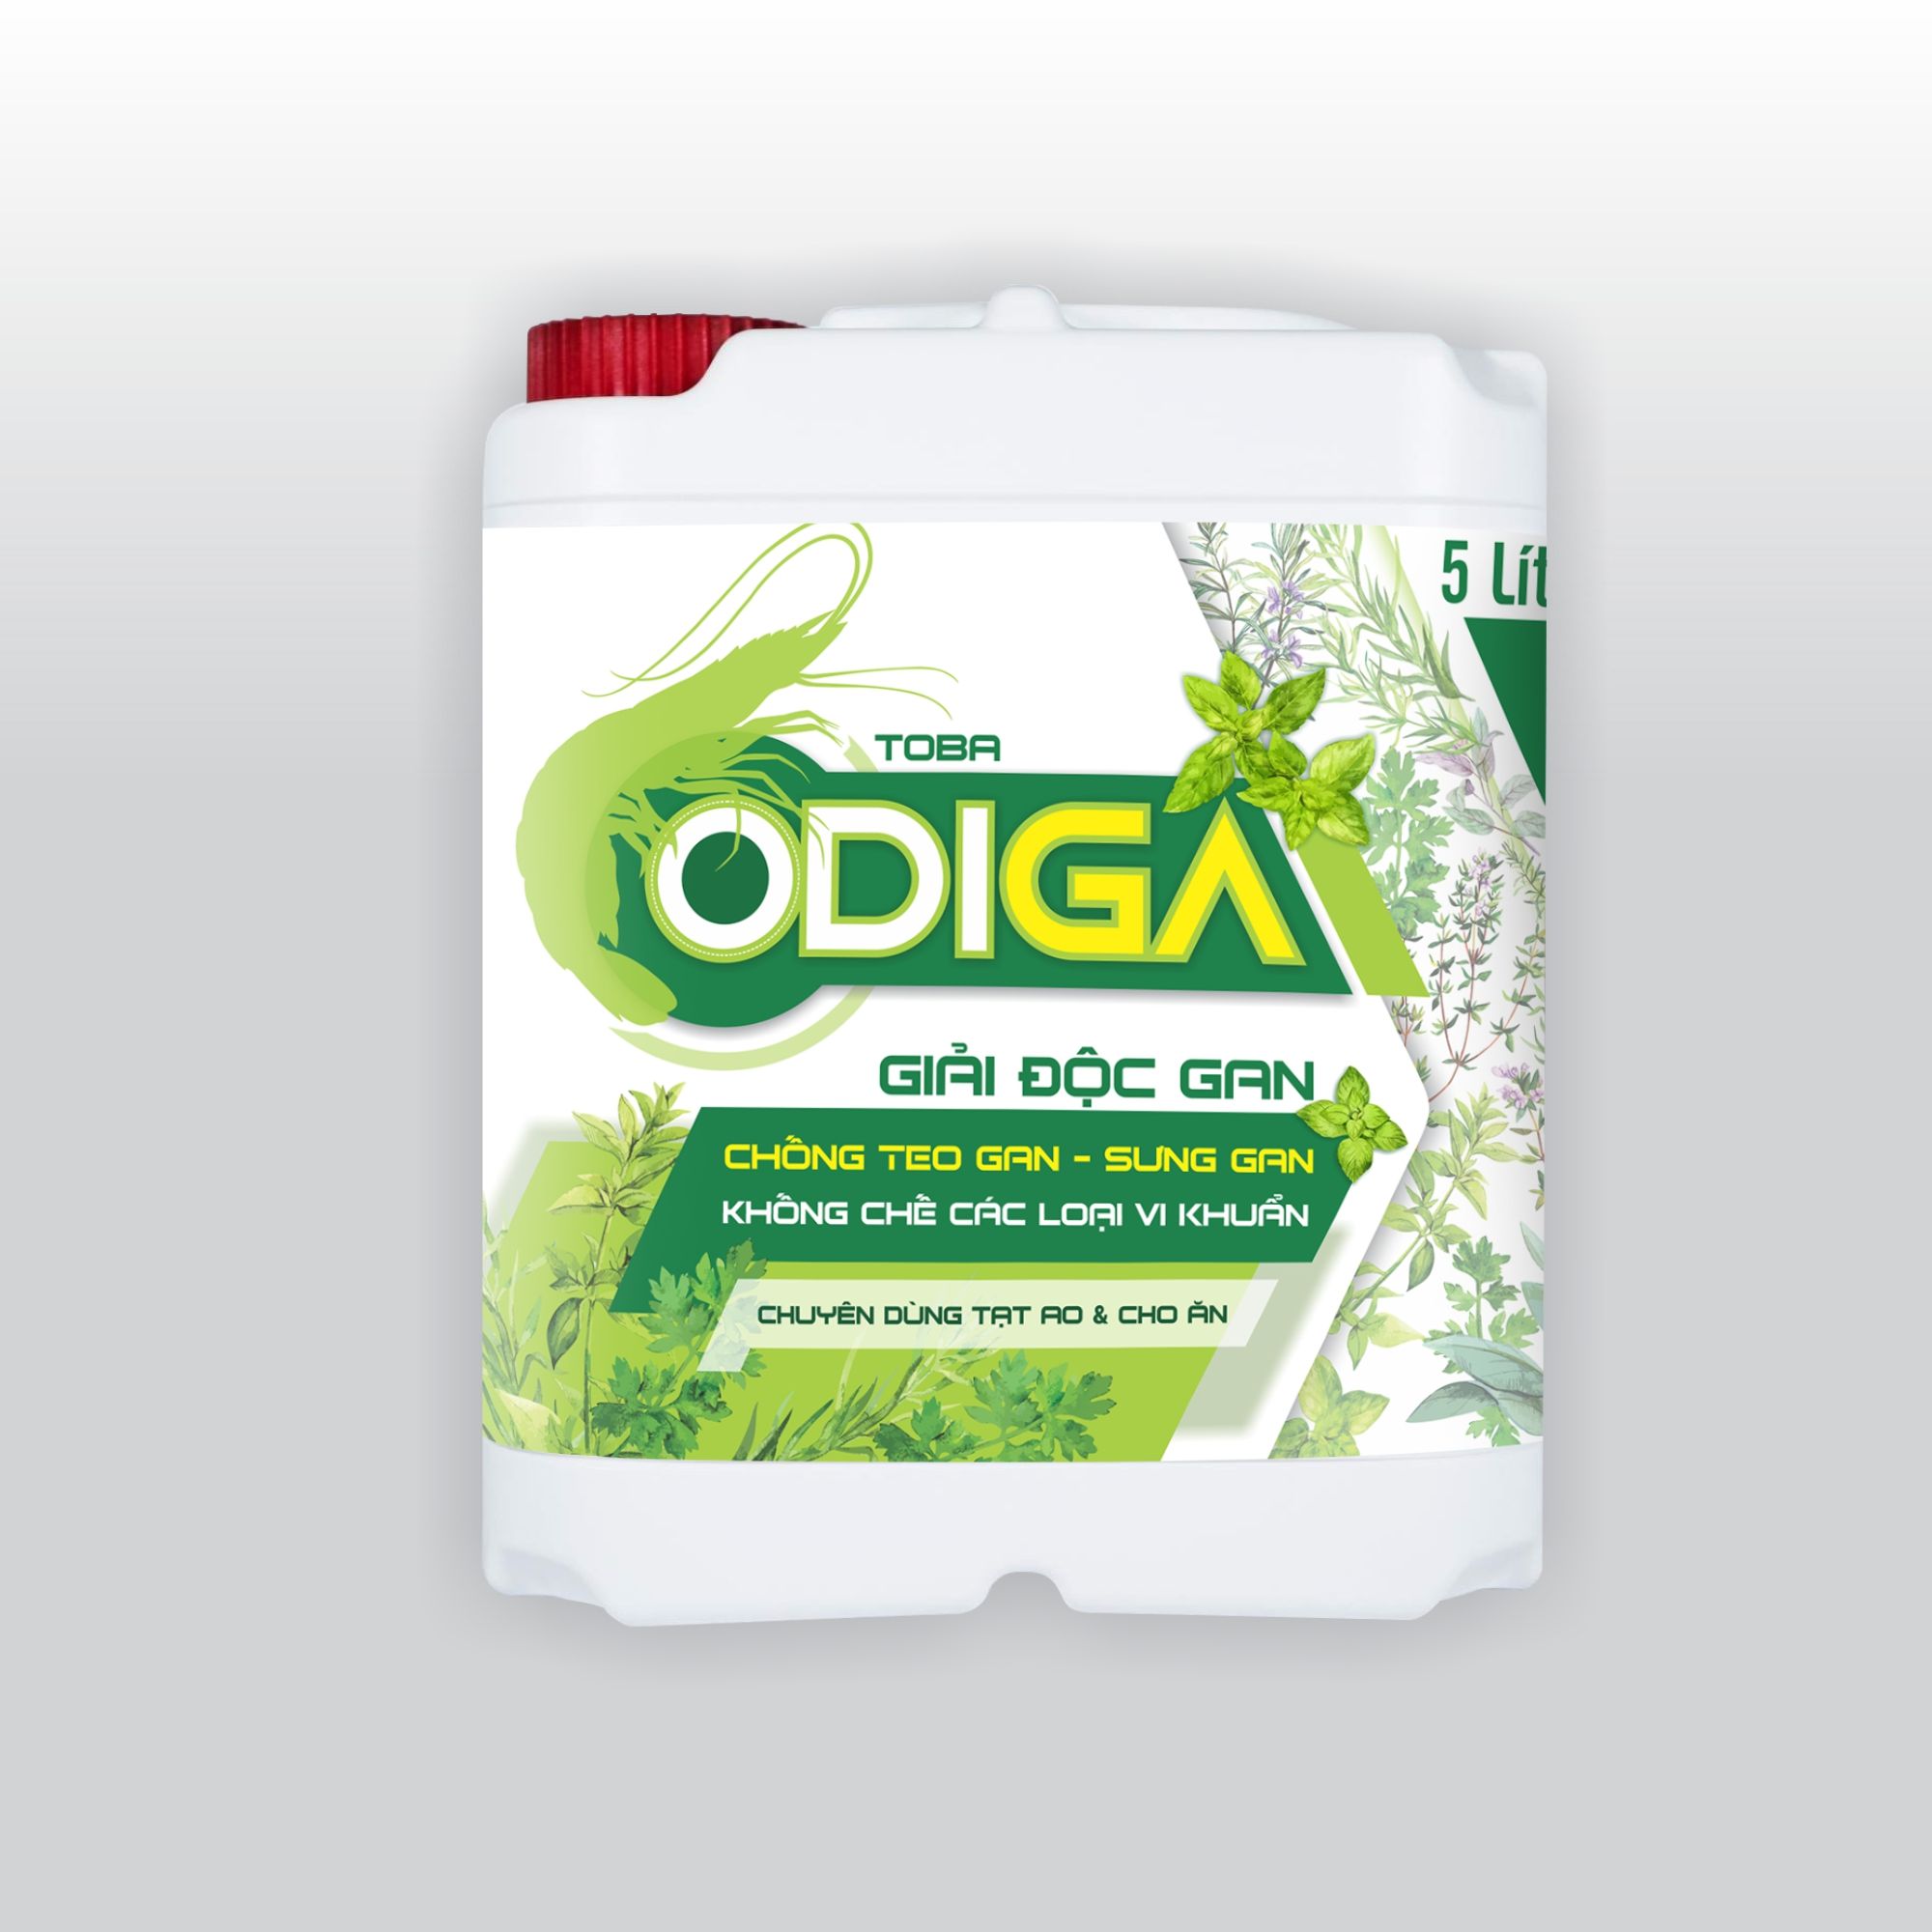 ODIGA - Can 5 Lit (TT-HPO04)